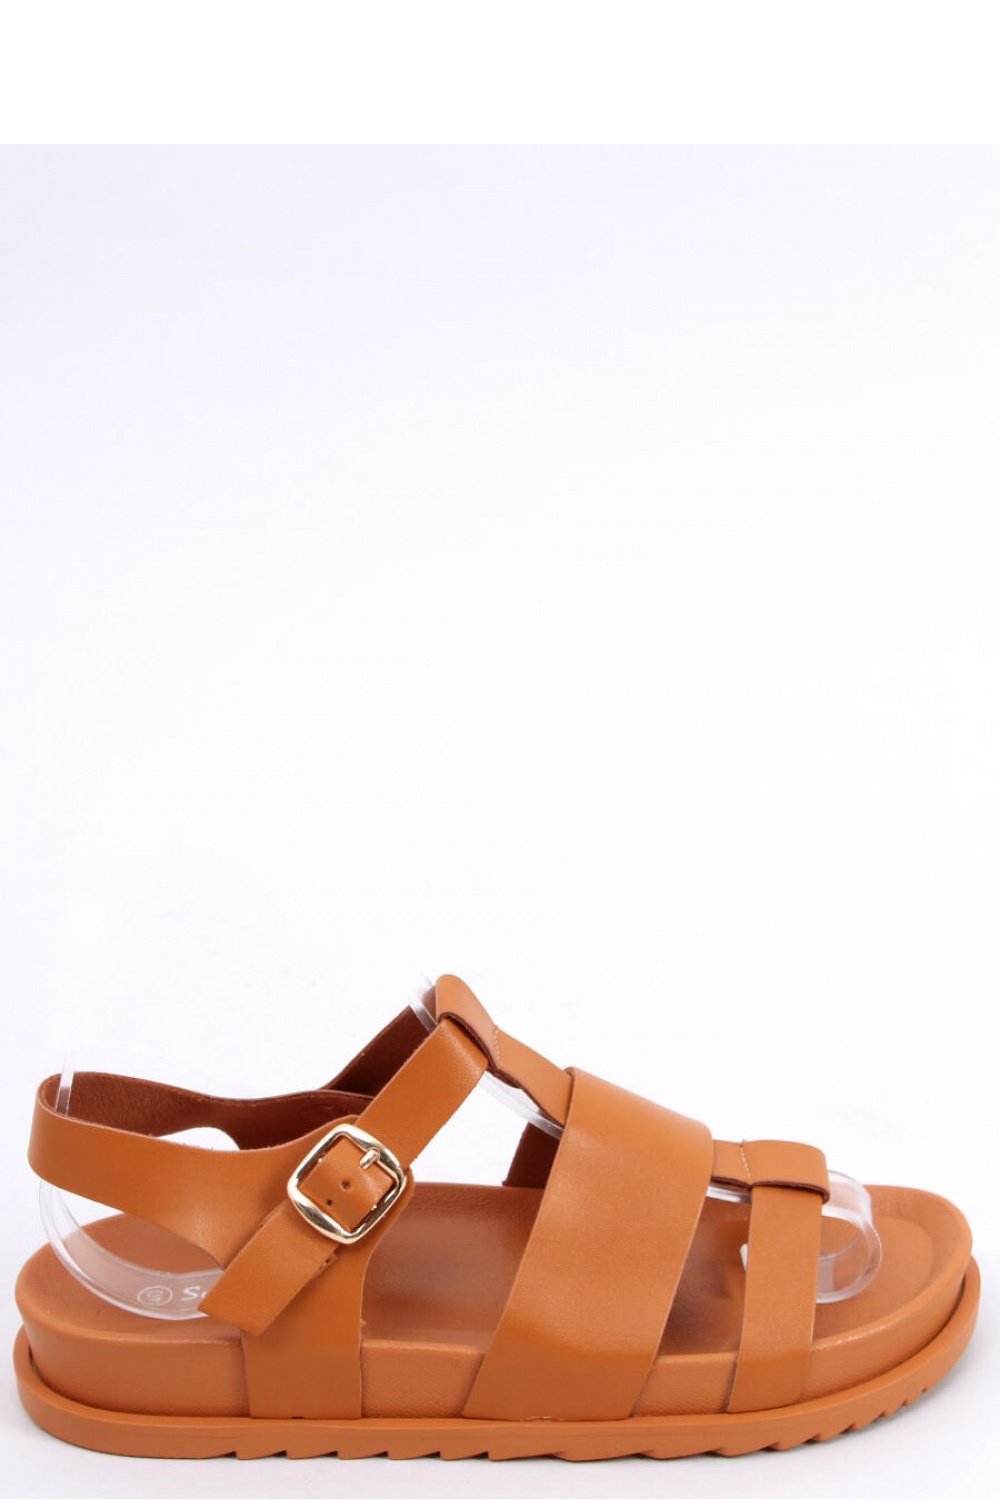 Sandals model 167277 Inello Posh Styles Apparel